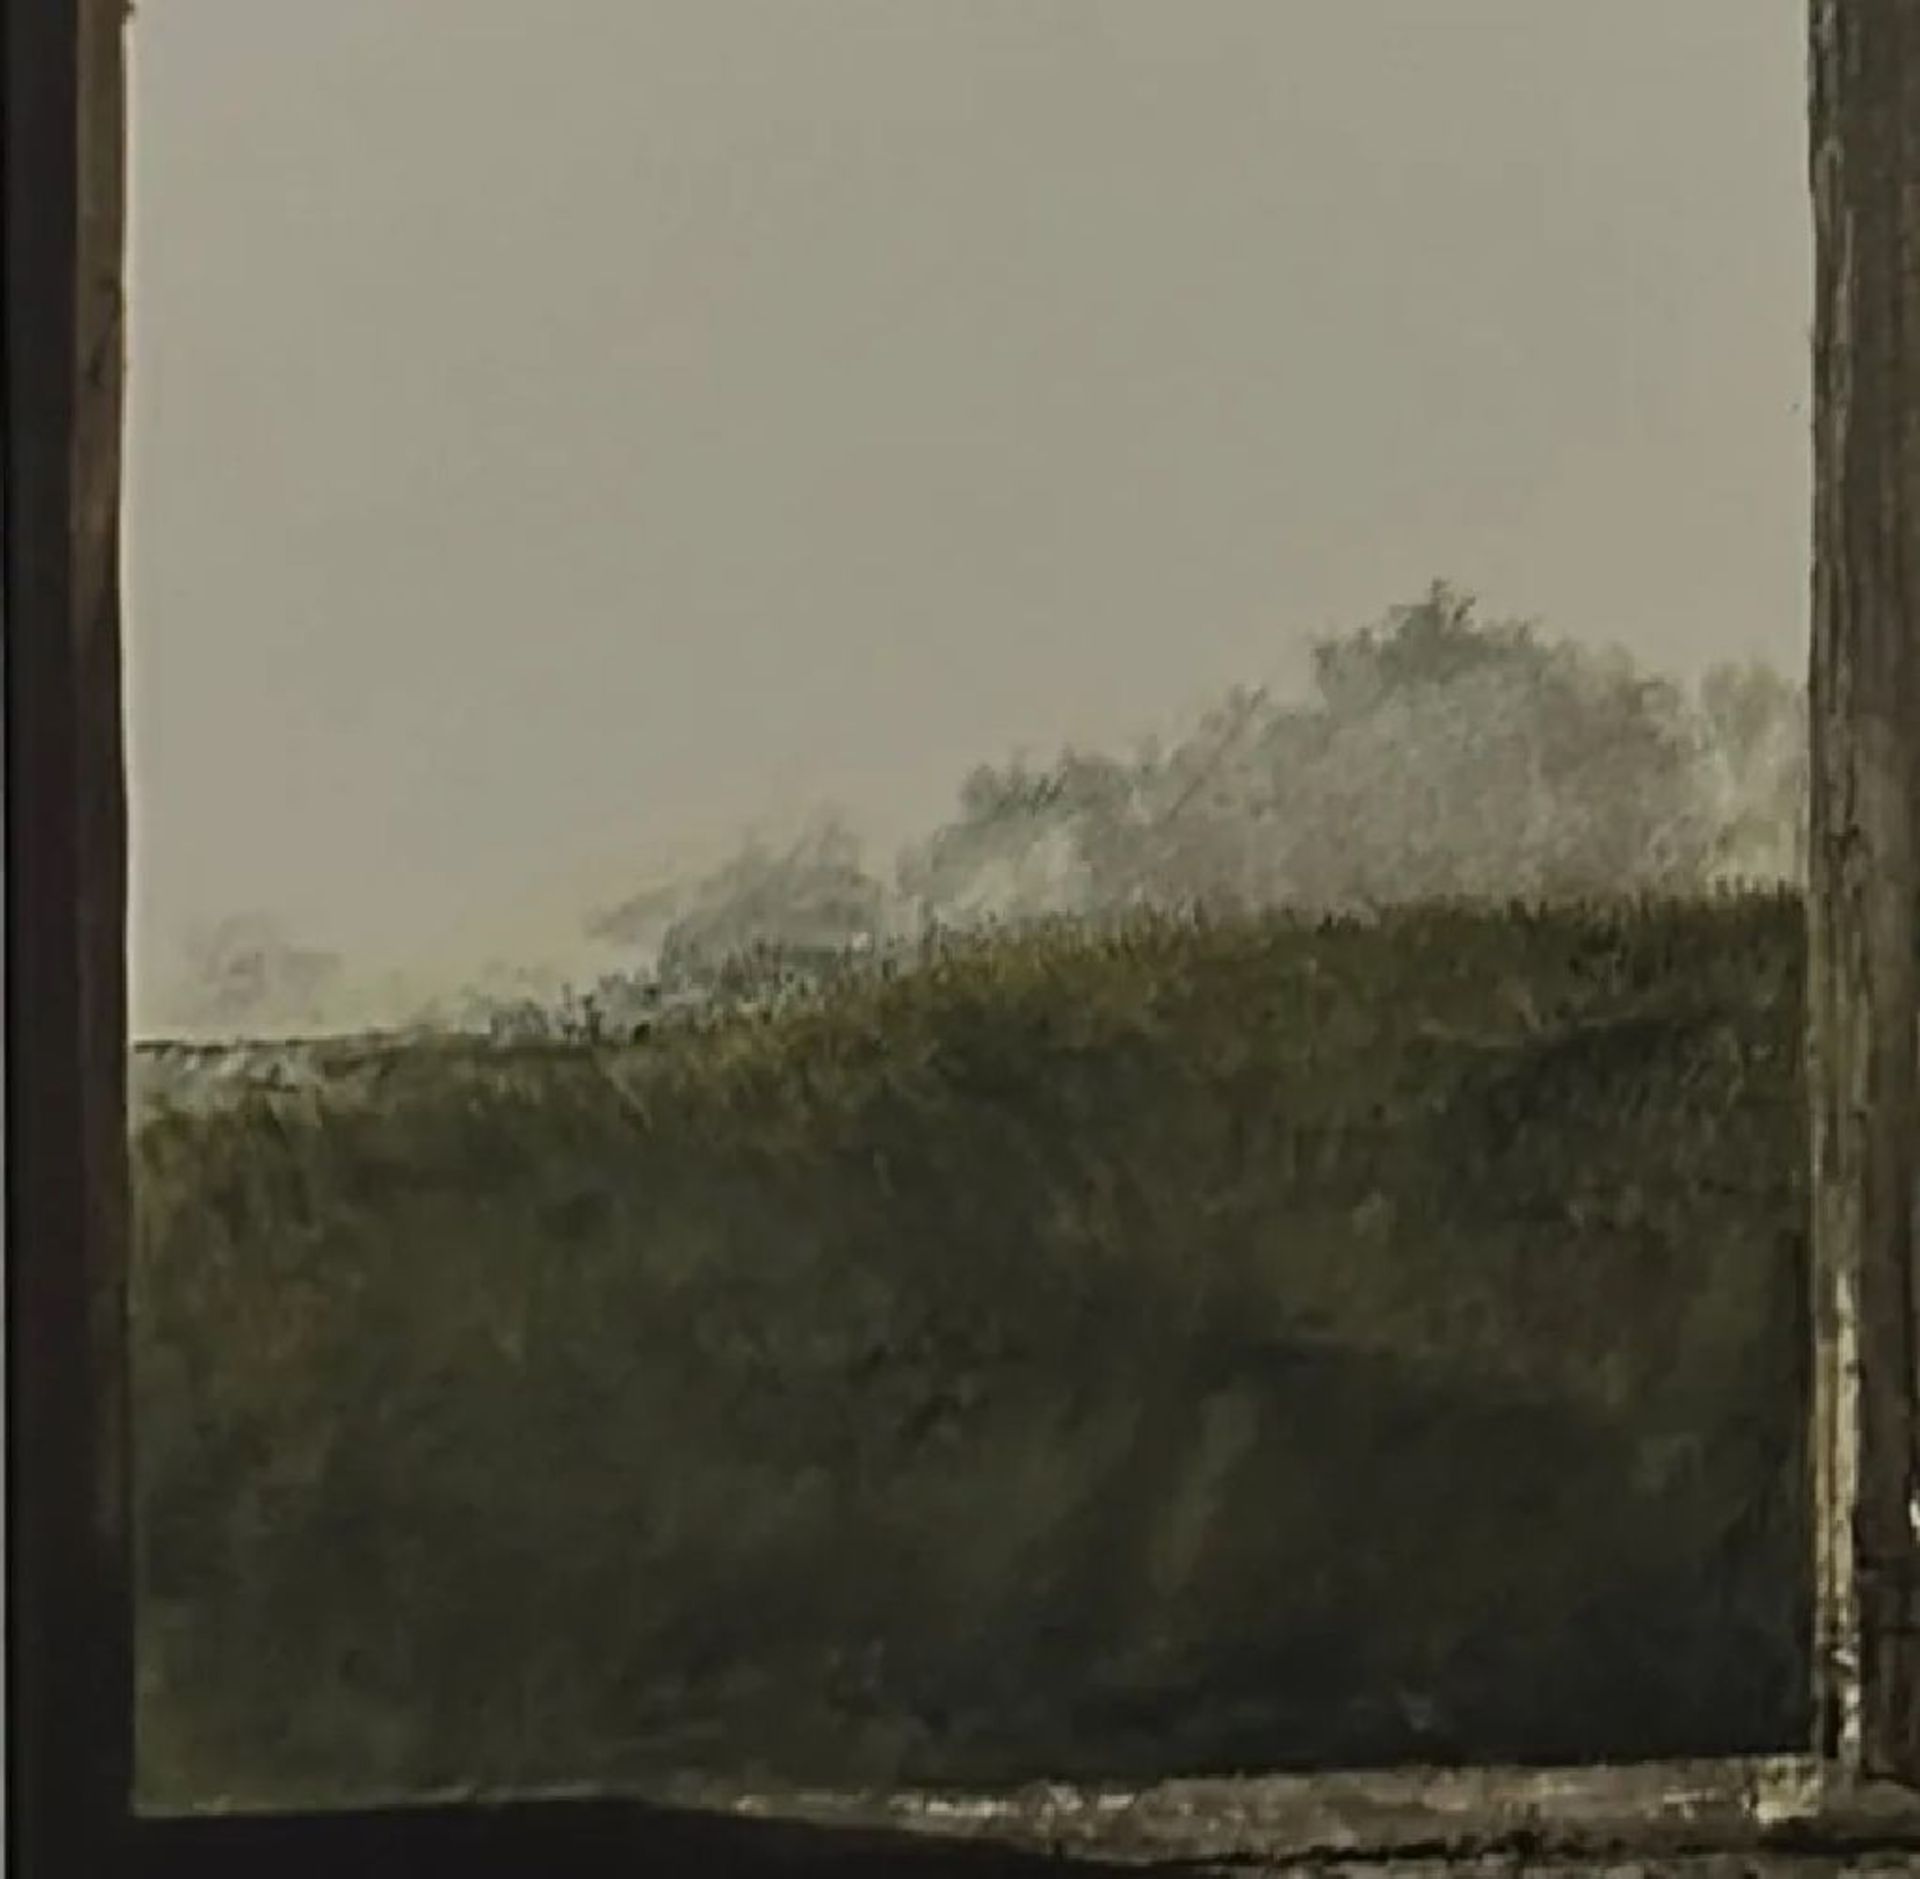 Jamie Wyeth "Untitled" Print - Image 3 of 6